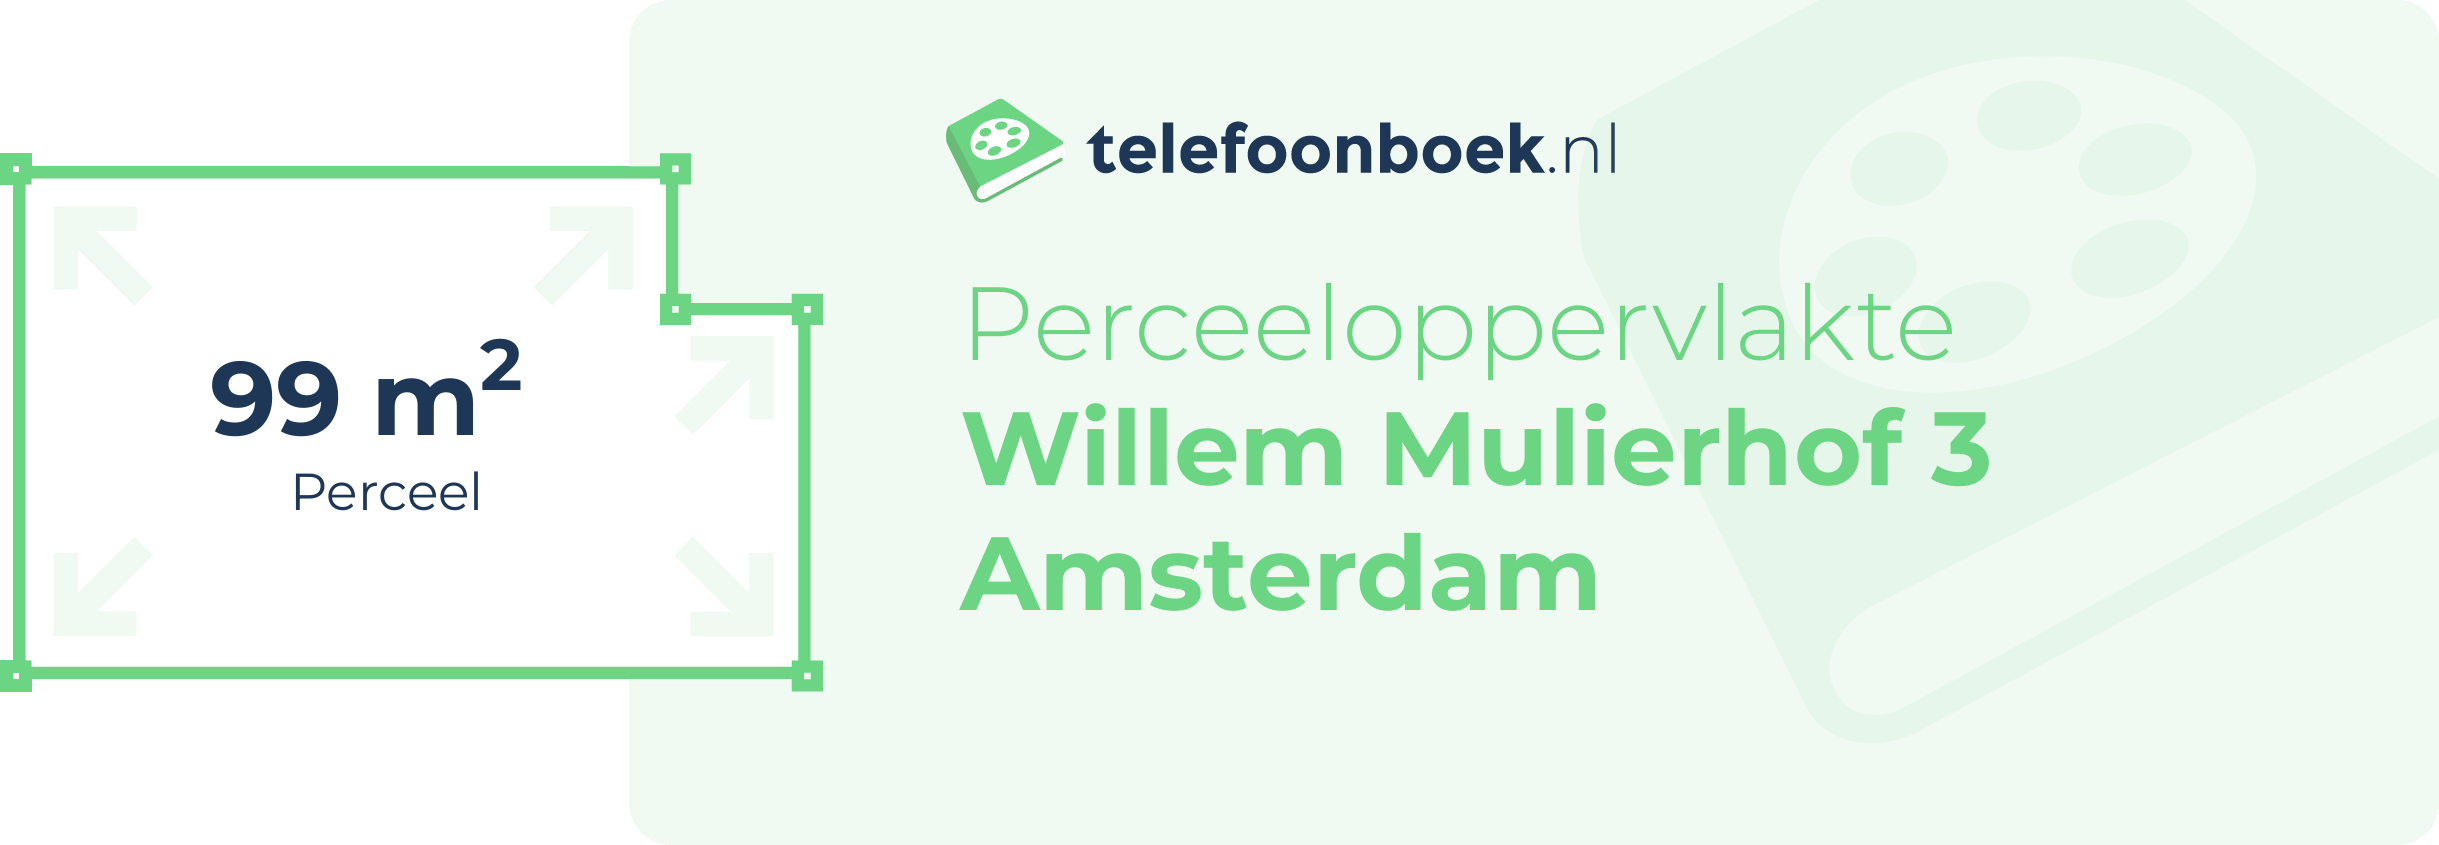 Perceeloppervlakte Willem Mulierhof 3 Amsterdam